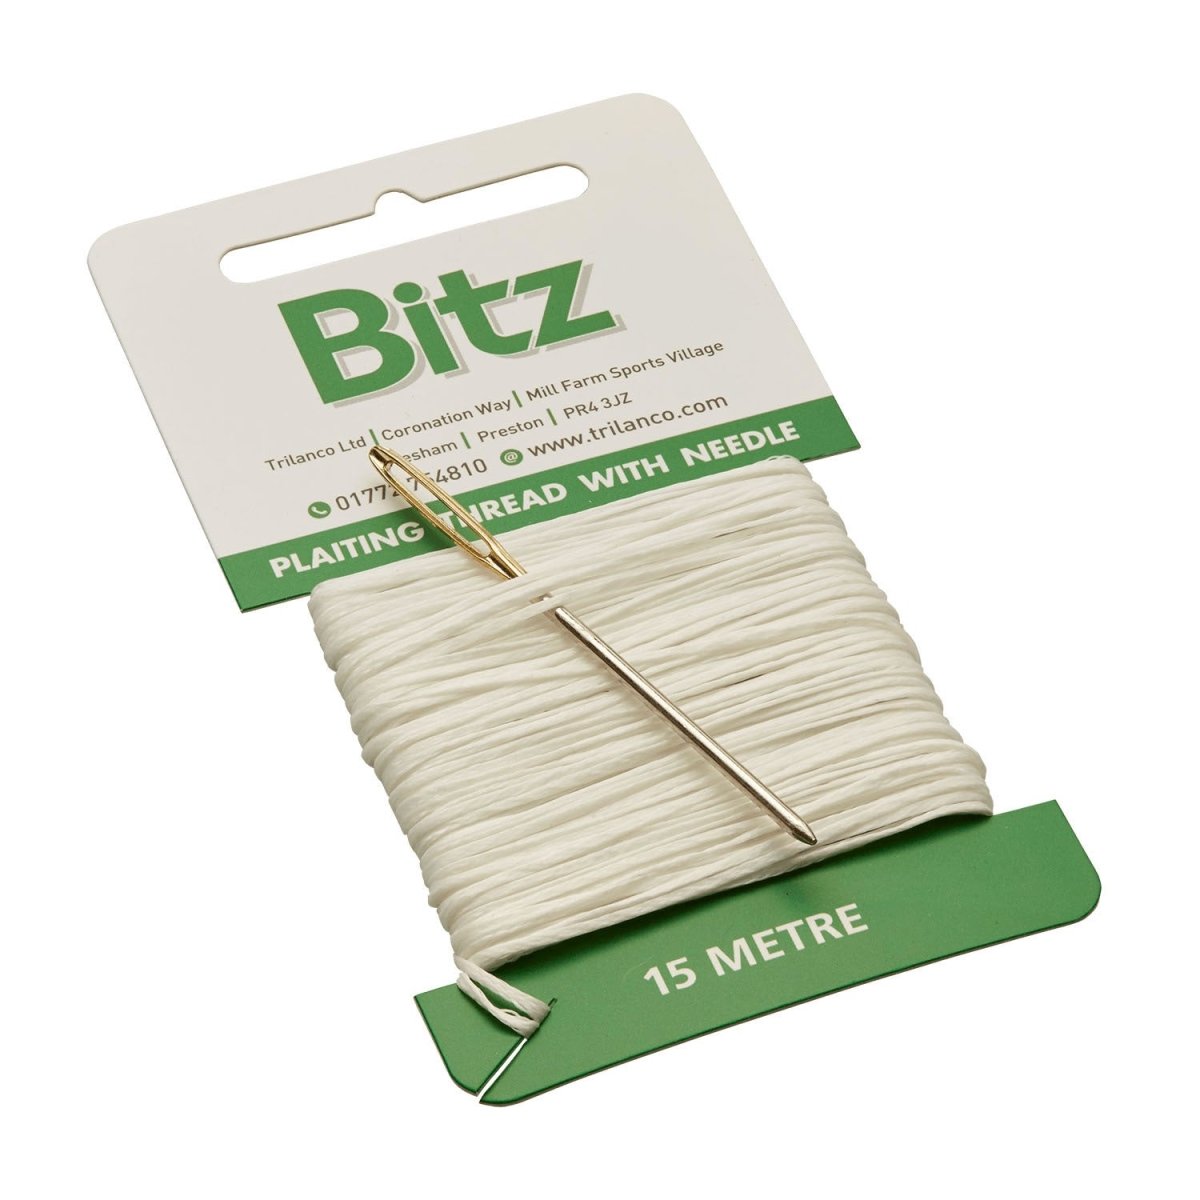 Bitz Plaiting Card With Needle - White - 15M